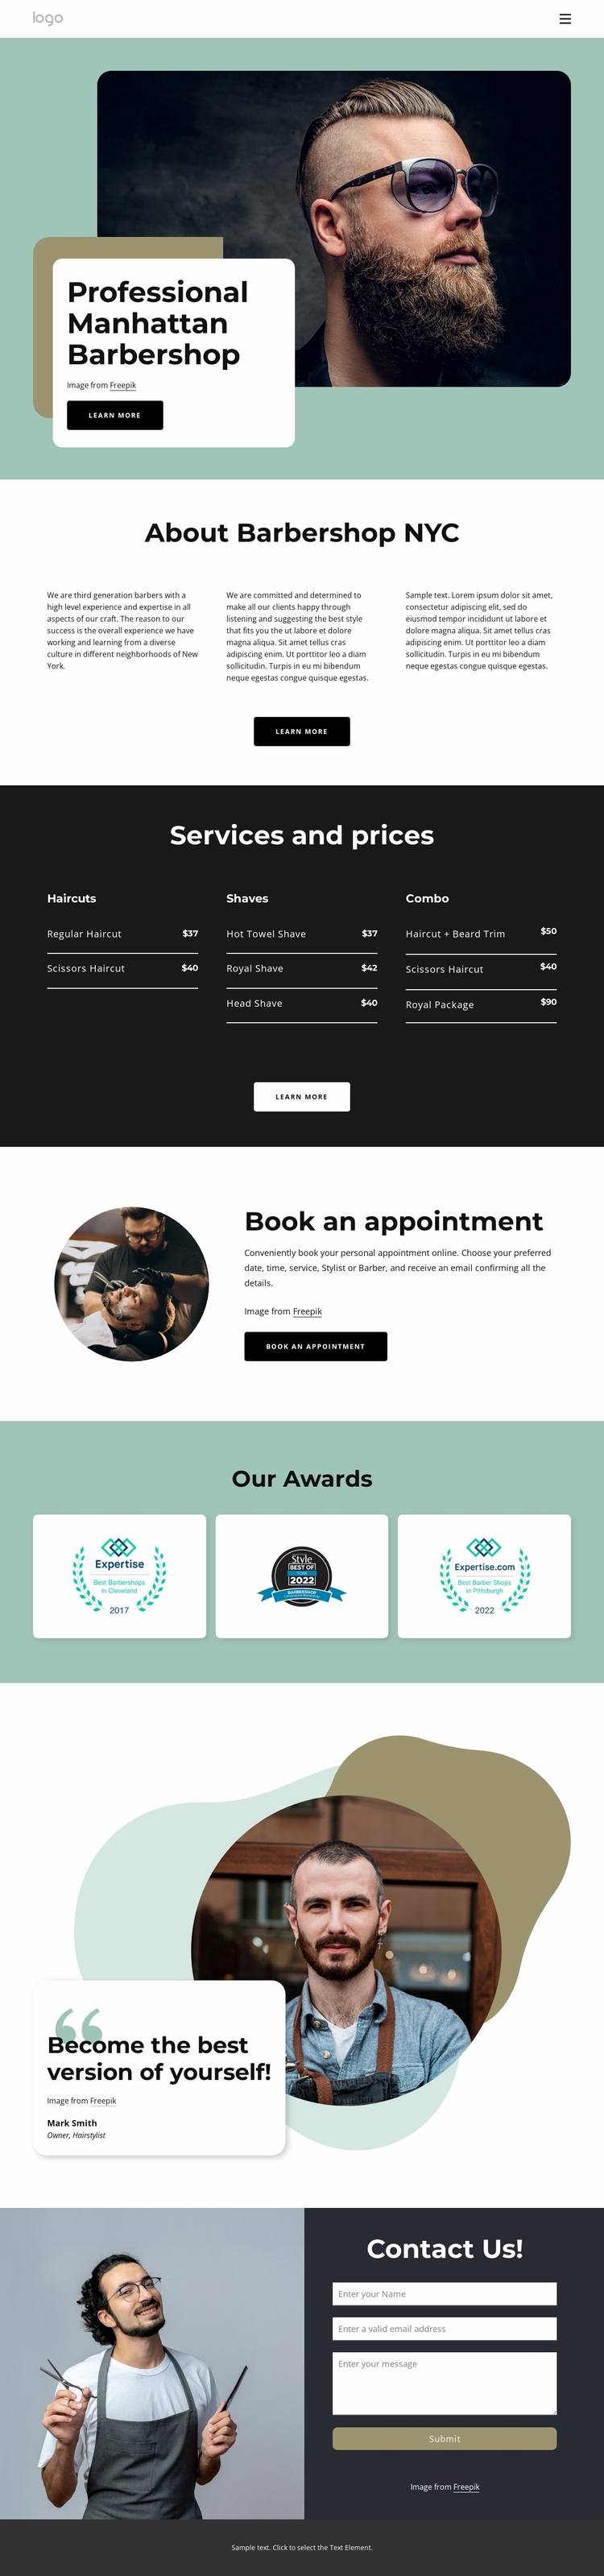 About Manhattan barbershop Website Design